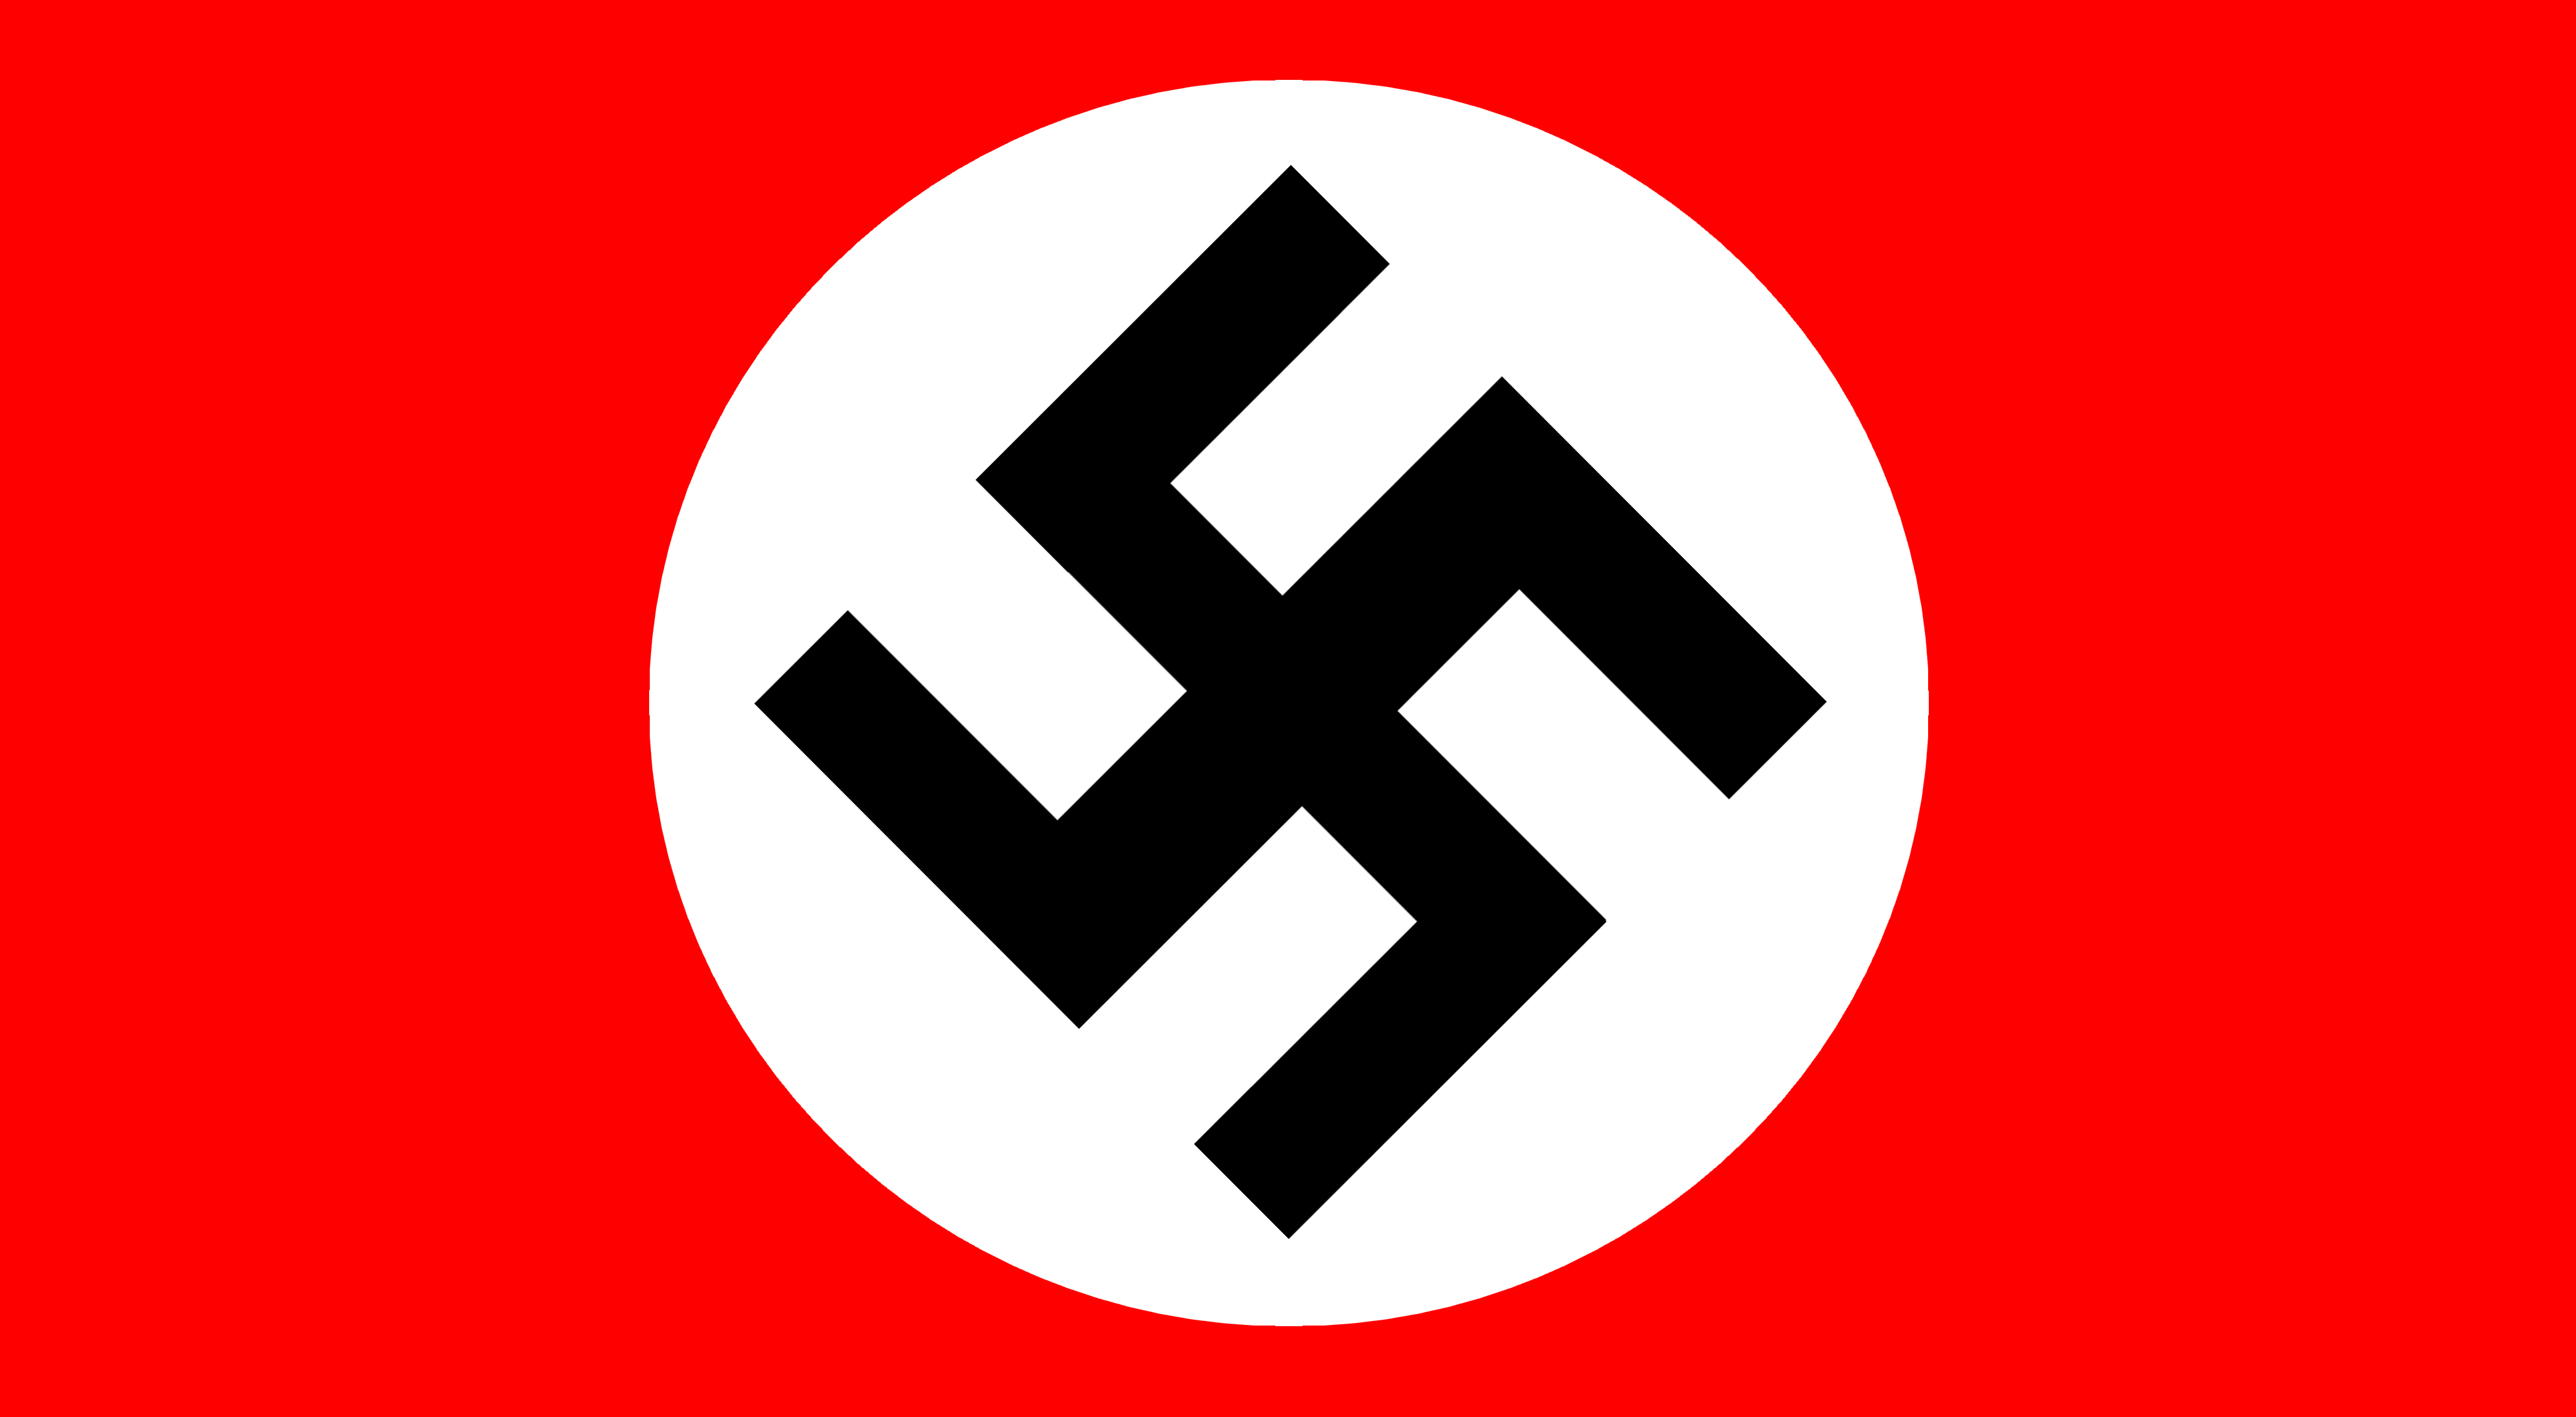 nazi__swastika__flag_by_cukuwalker-d5yc8